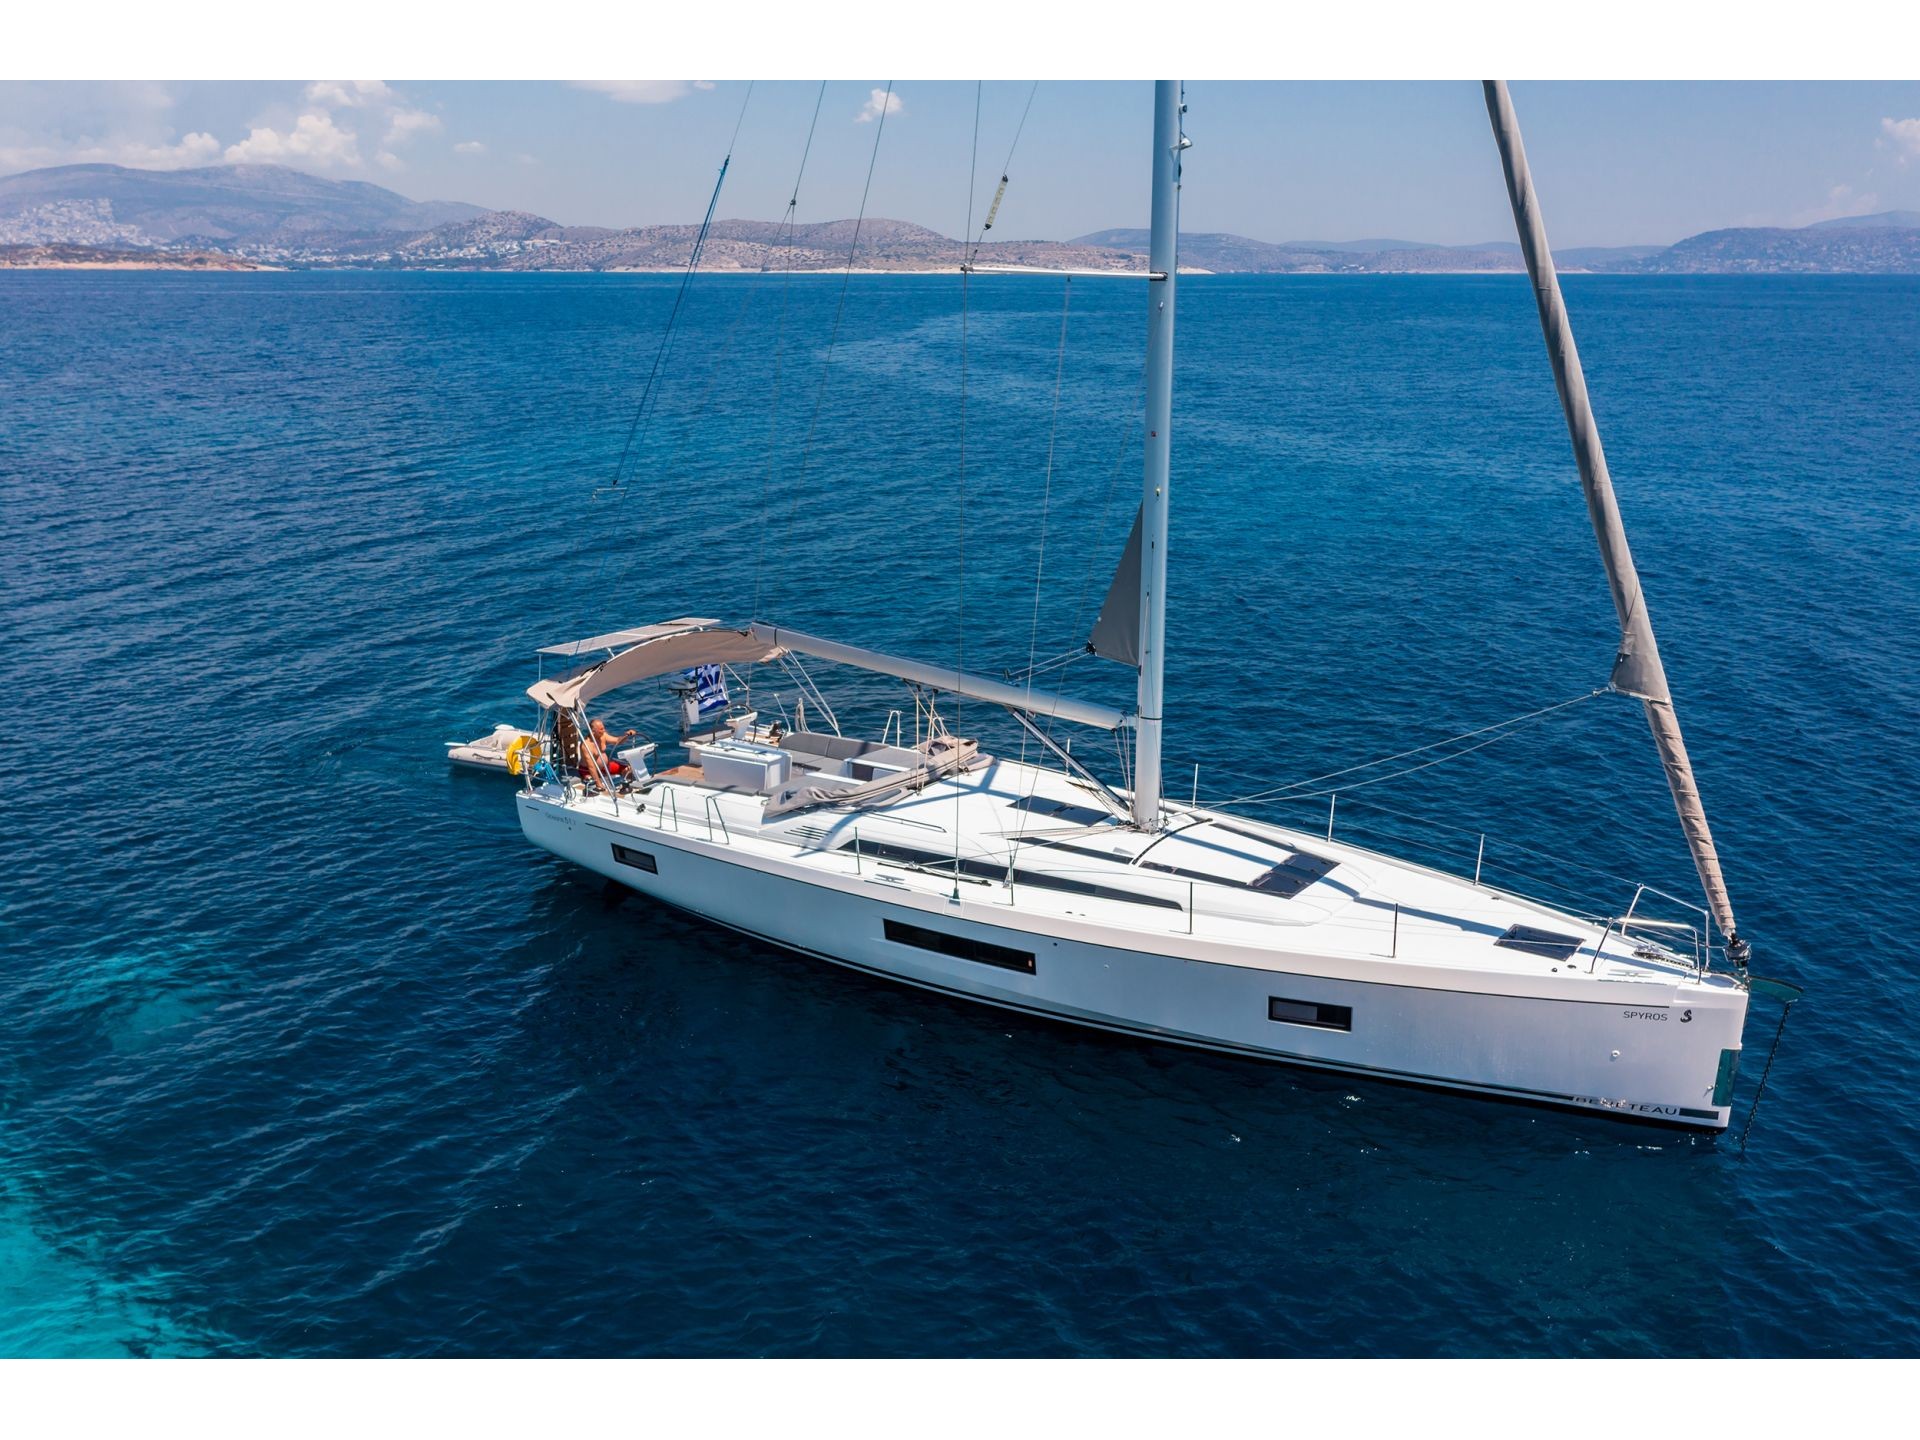 Yacht charter Oceanis 51.1 - Greece, Attica, will